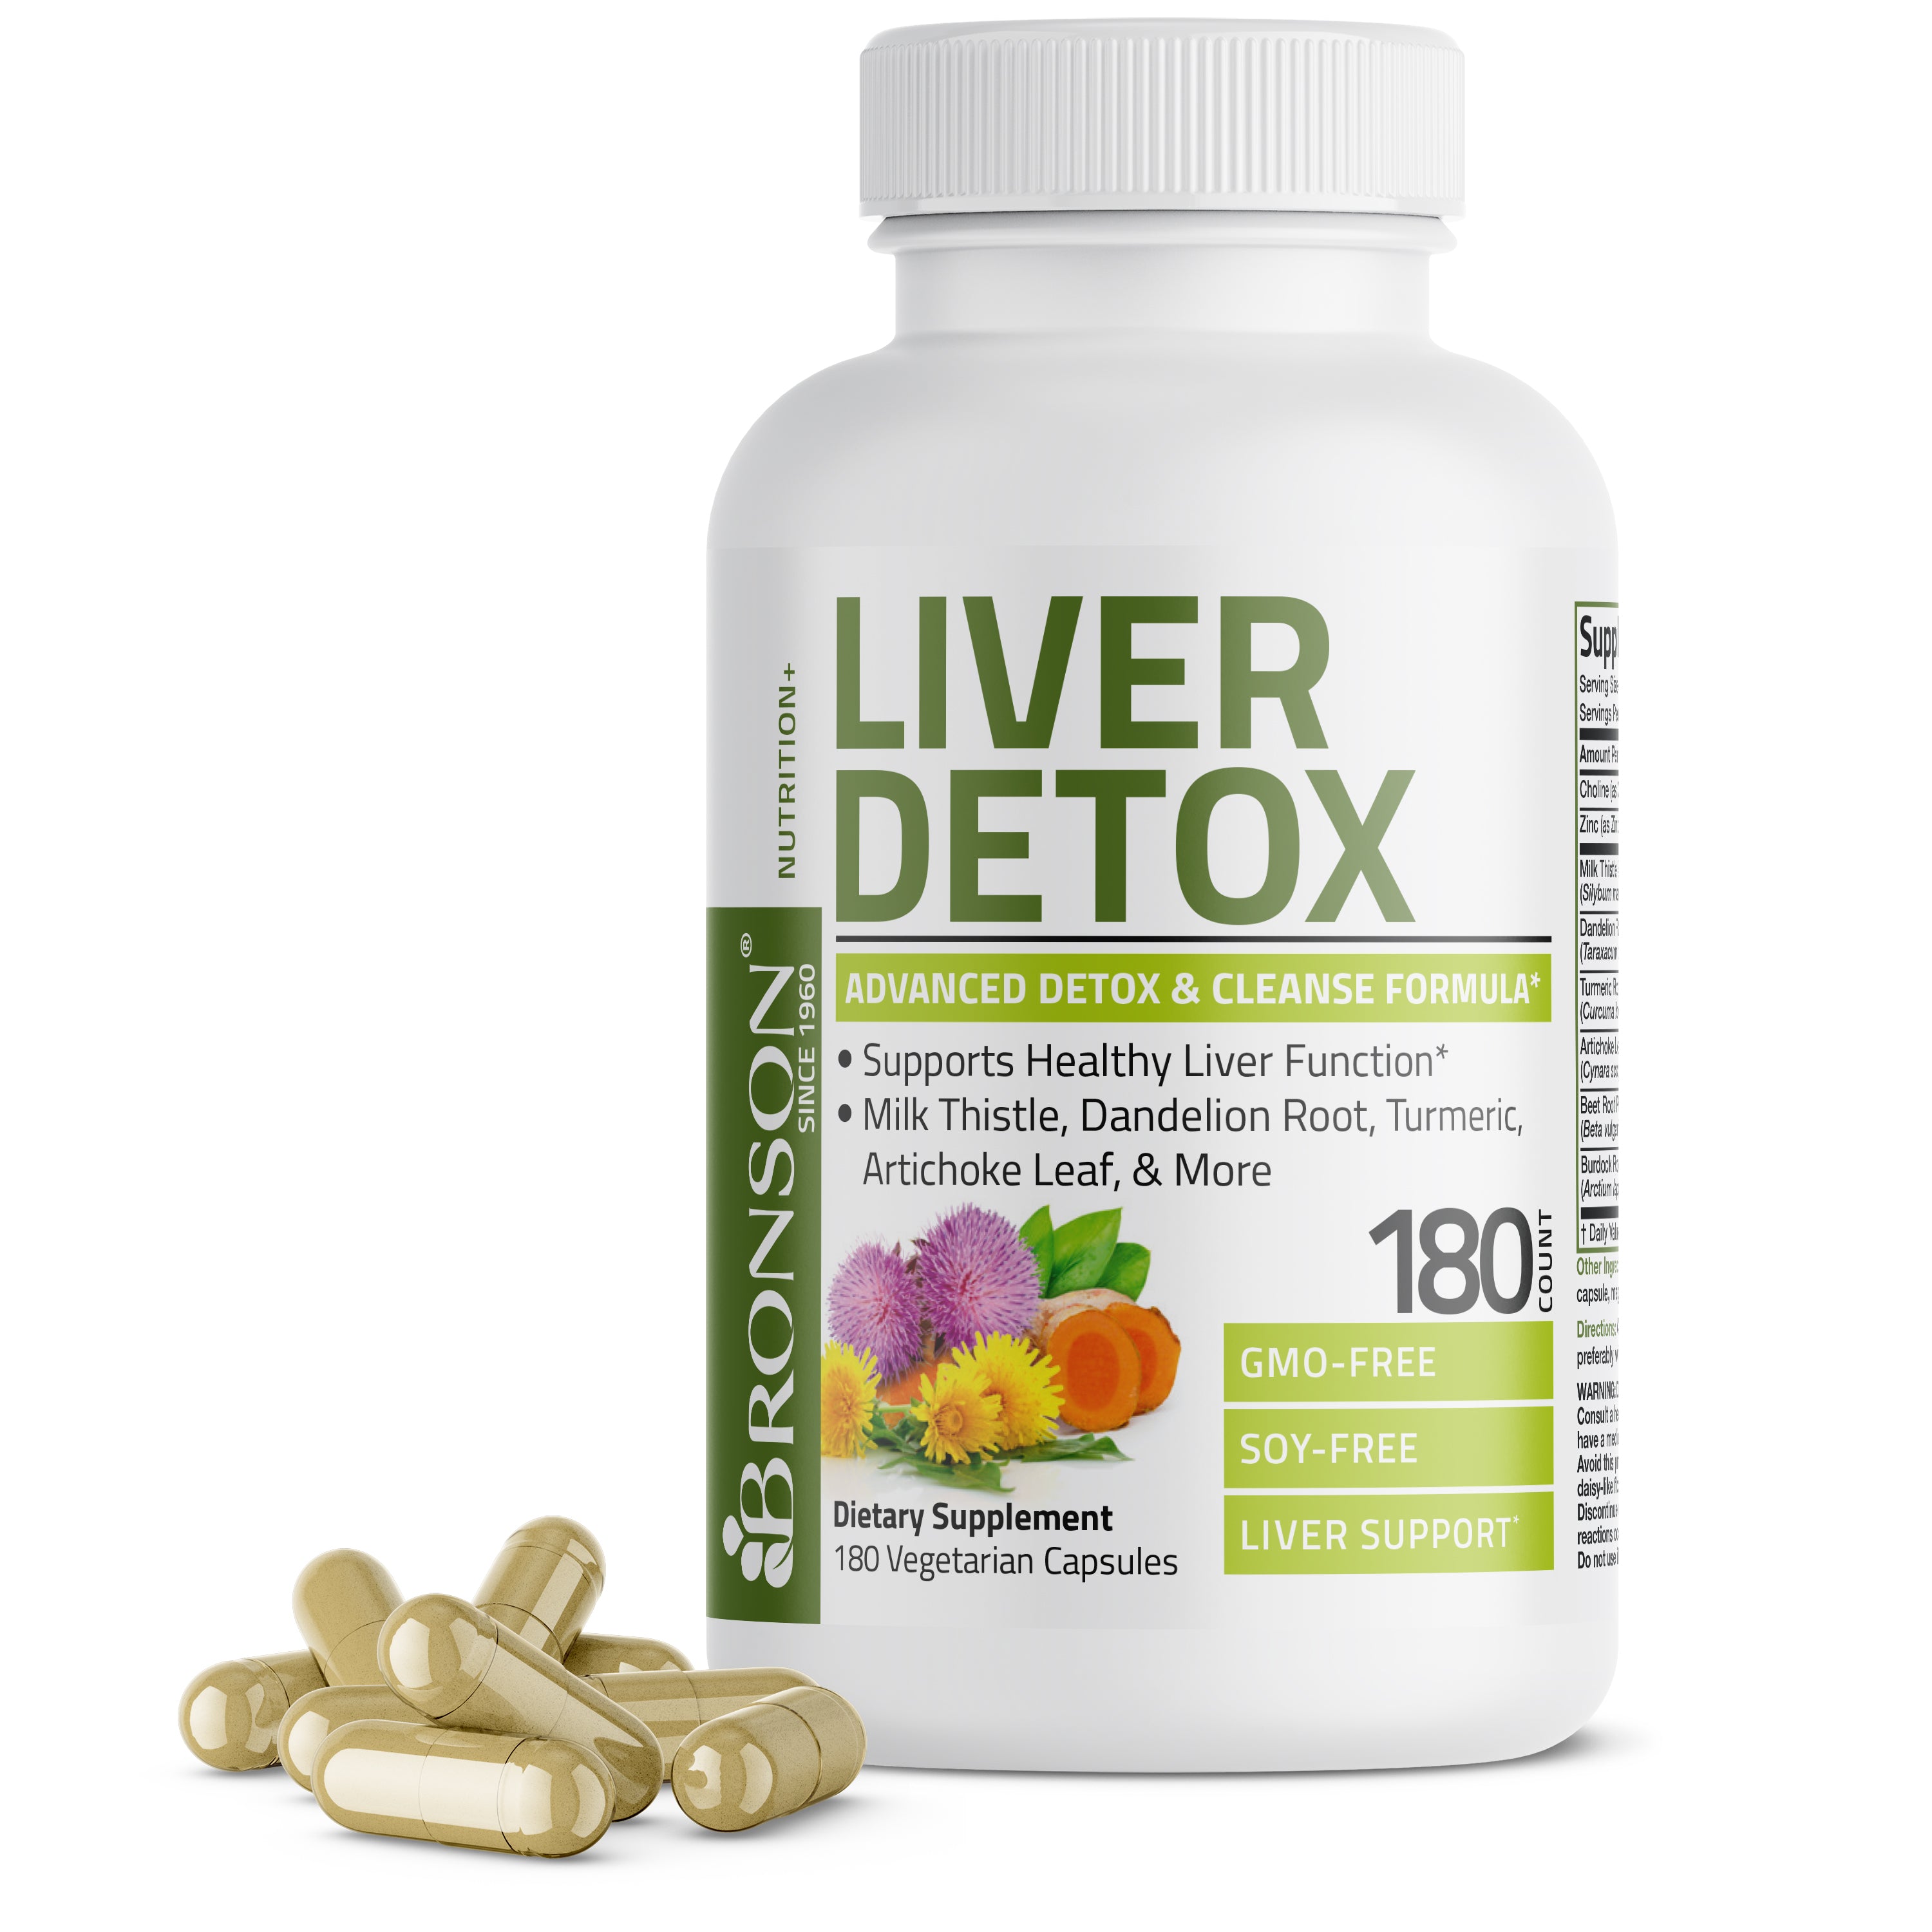 Liver Detox Advanced Detox & Cleansing Formula